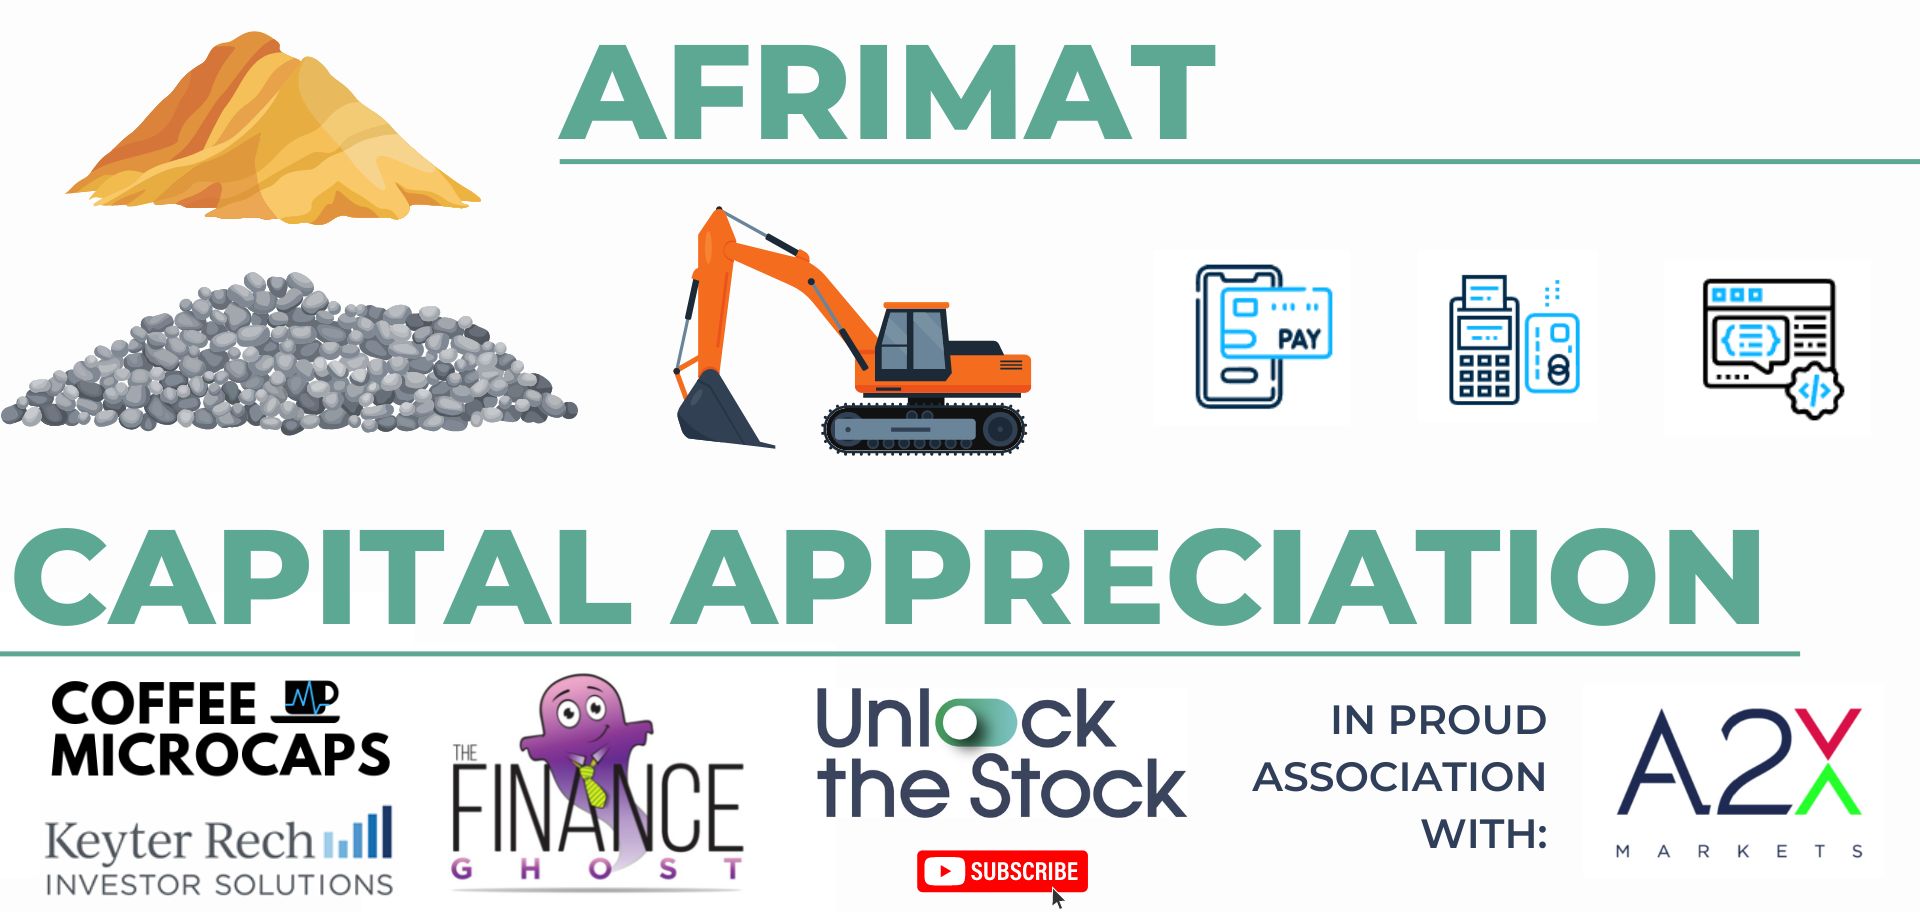 Unlock the Stock: Afrimat and Capital Appreciation